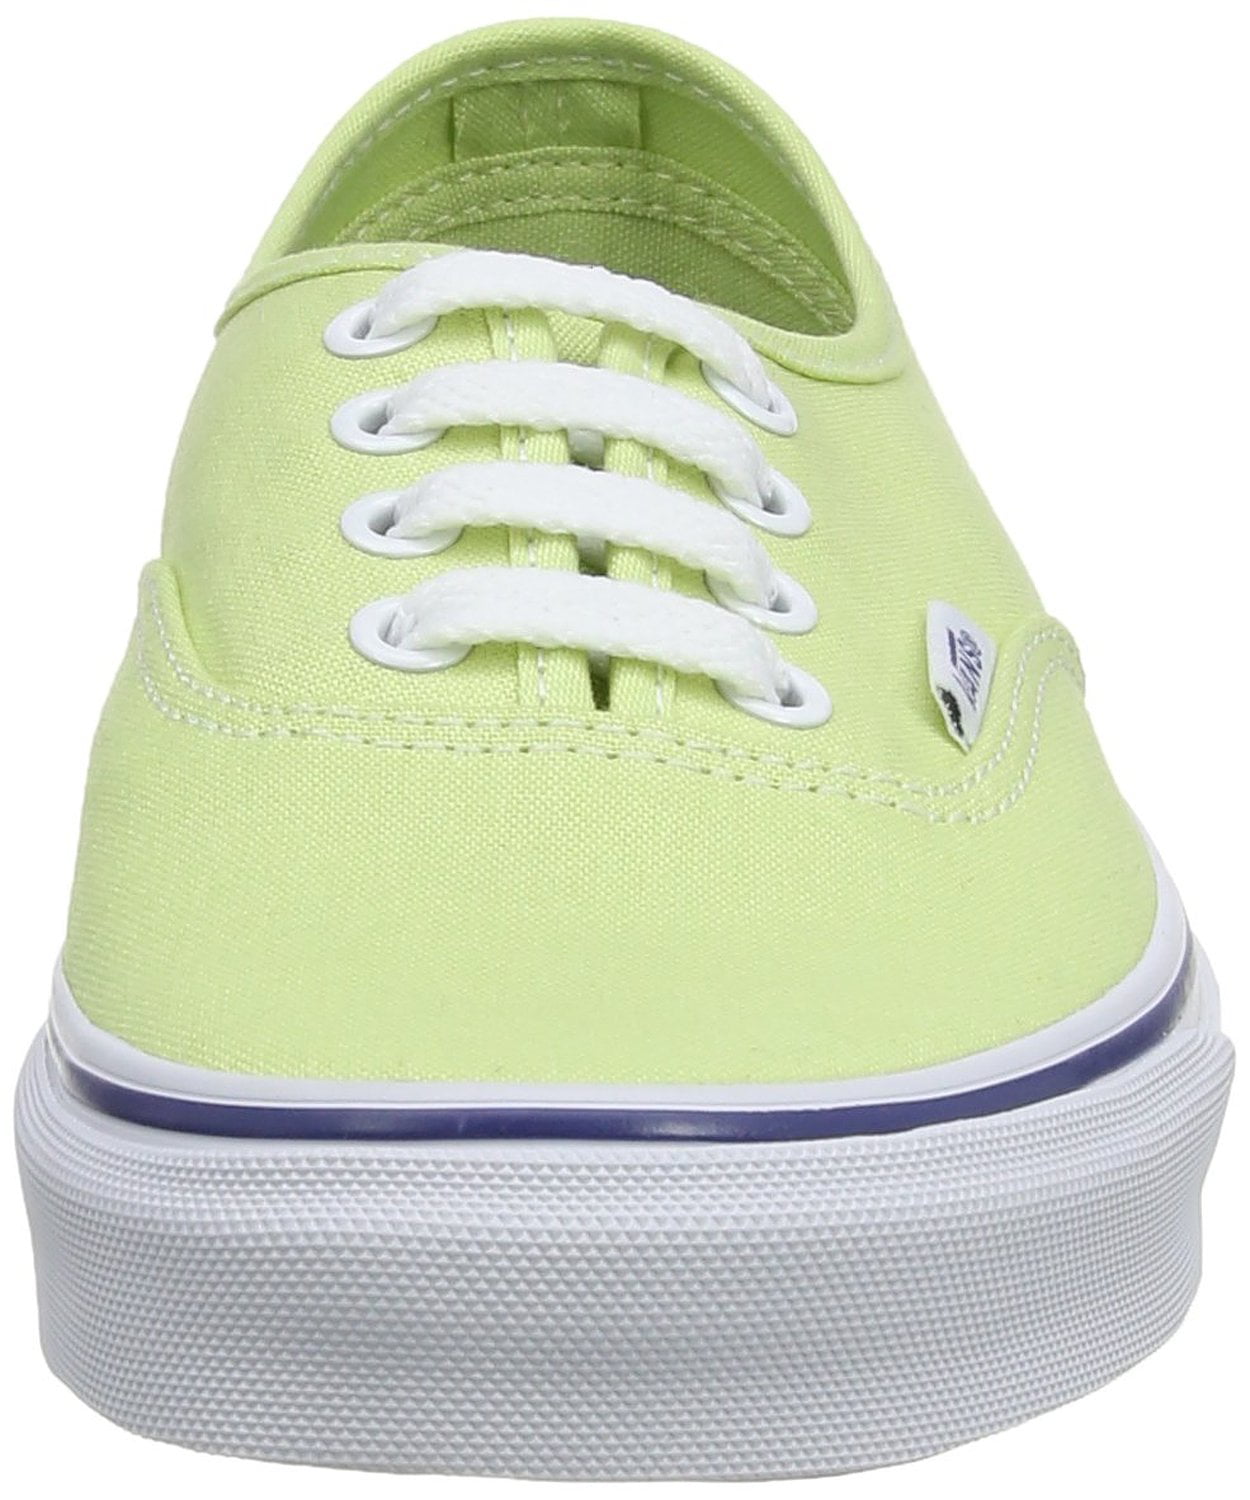 Lime кеды. Vans authentic High Top. Vans желтый зеленый белый. Hybrid Green Label Low-Top Sneakers.